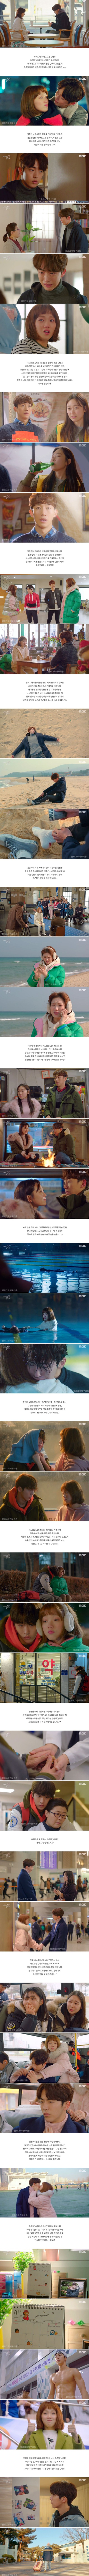 episode 15 captures for the Korean drama 'Weightlifting Fairy Kim Bok-joo'